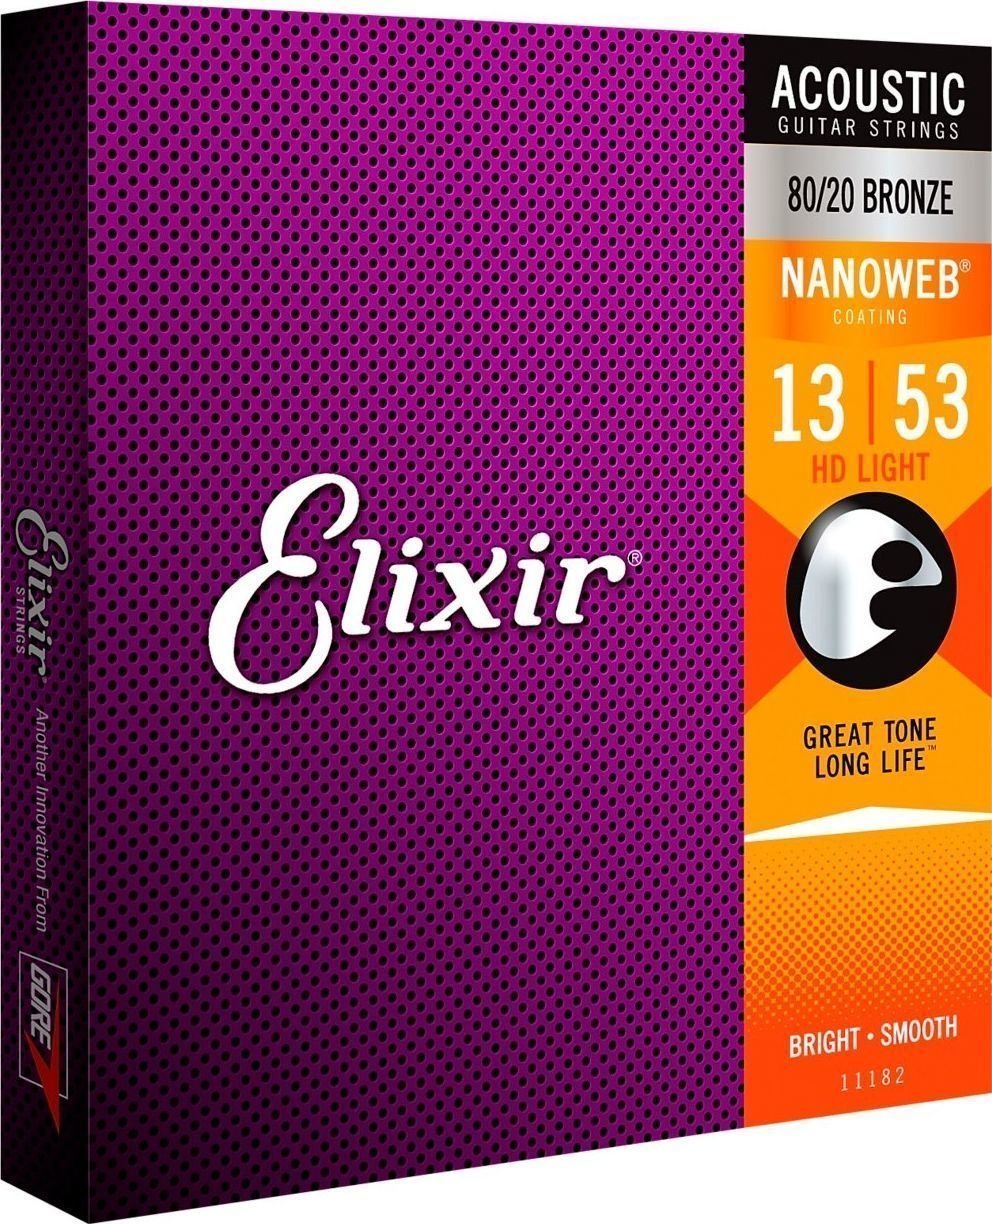 Guitar strings Elixir 11182 Nanoweb 13-53